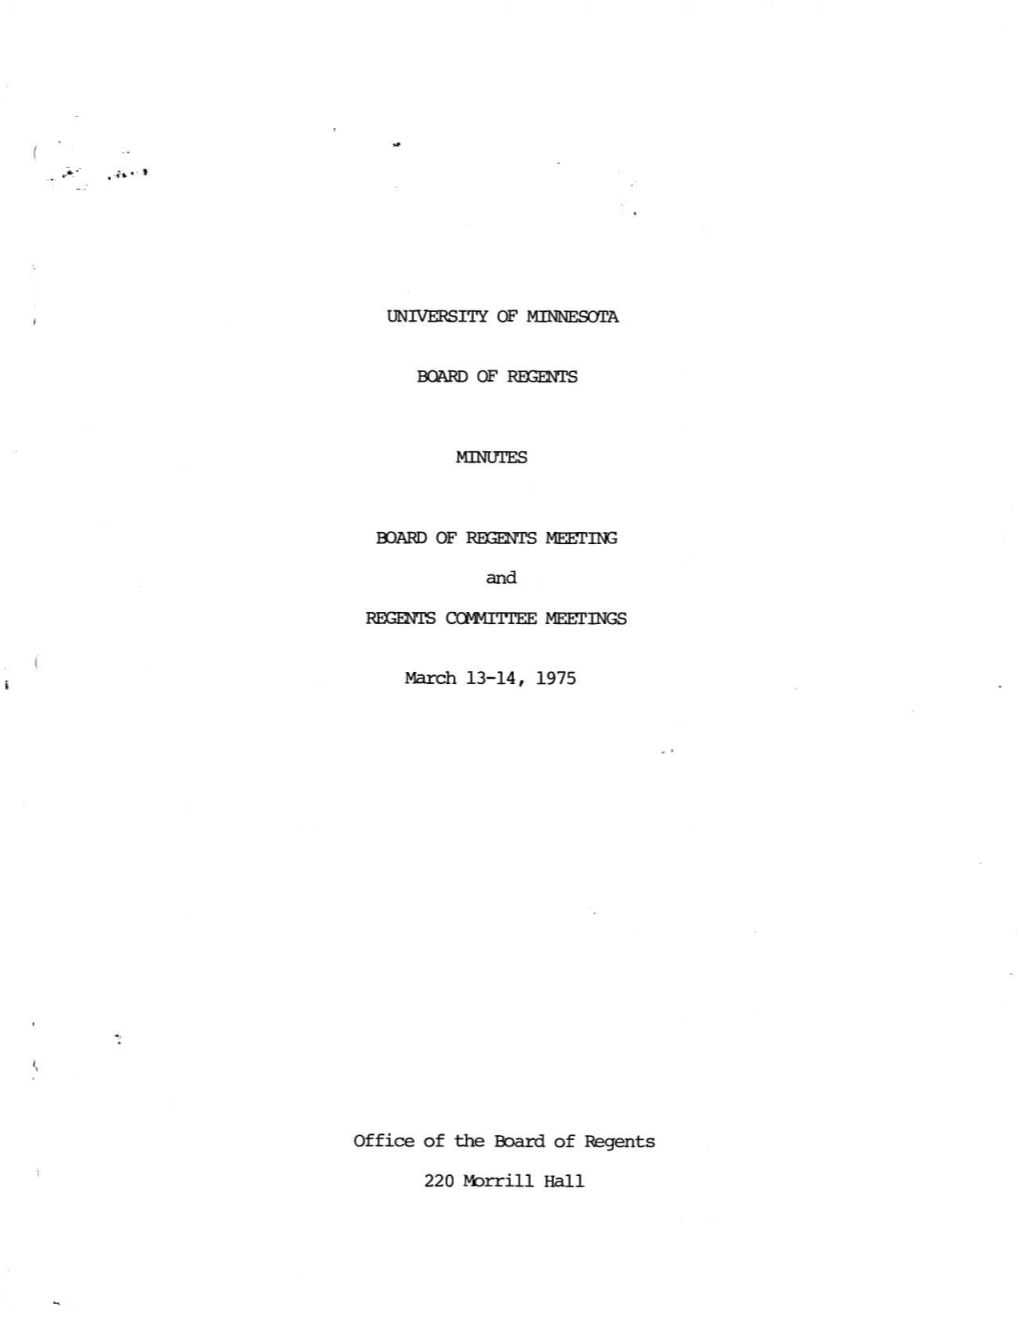 University of Minnesota. Board of Regents Minutes, March 13-14, 1975